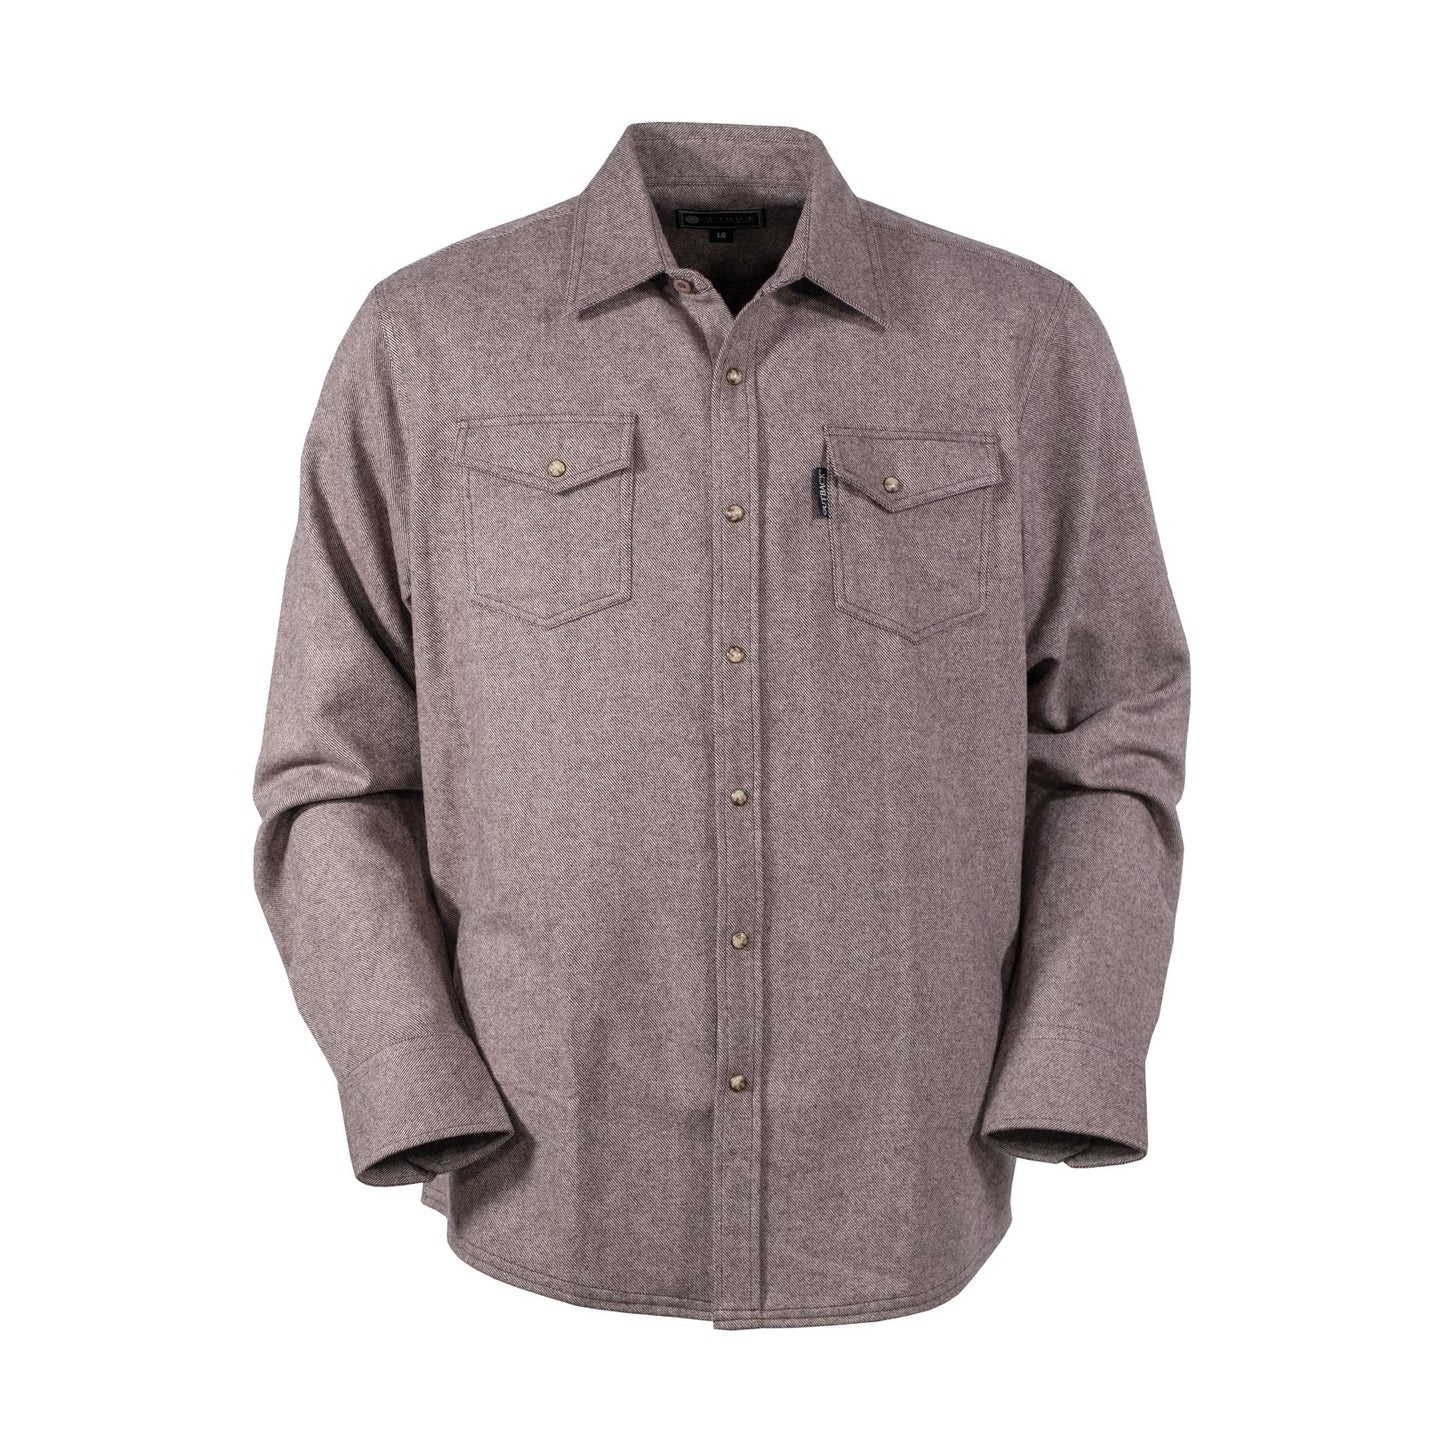 Outback Trading Company Men's Declan Brown Shirt Jacket 42240-BRN